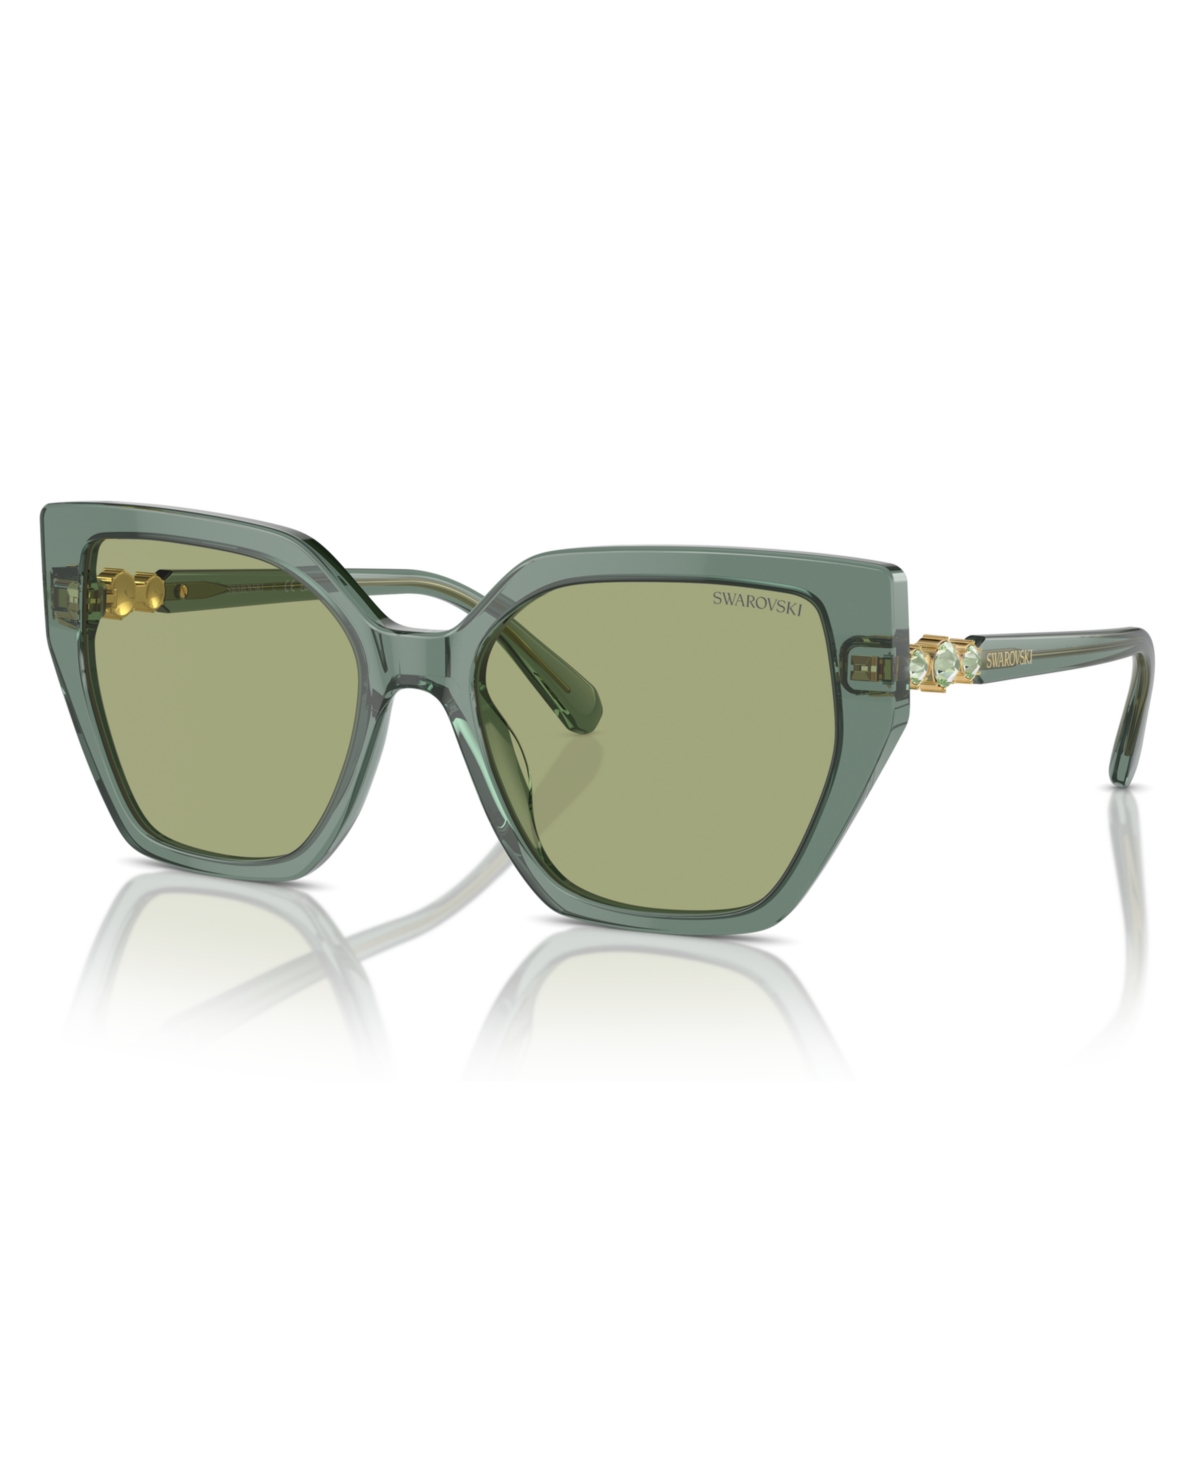 Women's Sunglasses, Sk6016 - Transparent Beige